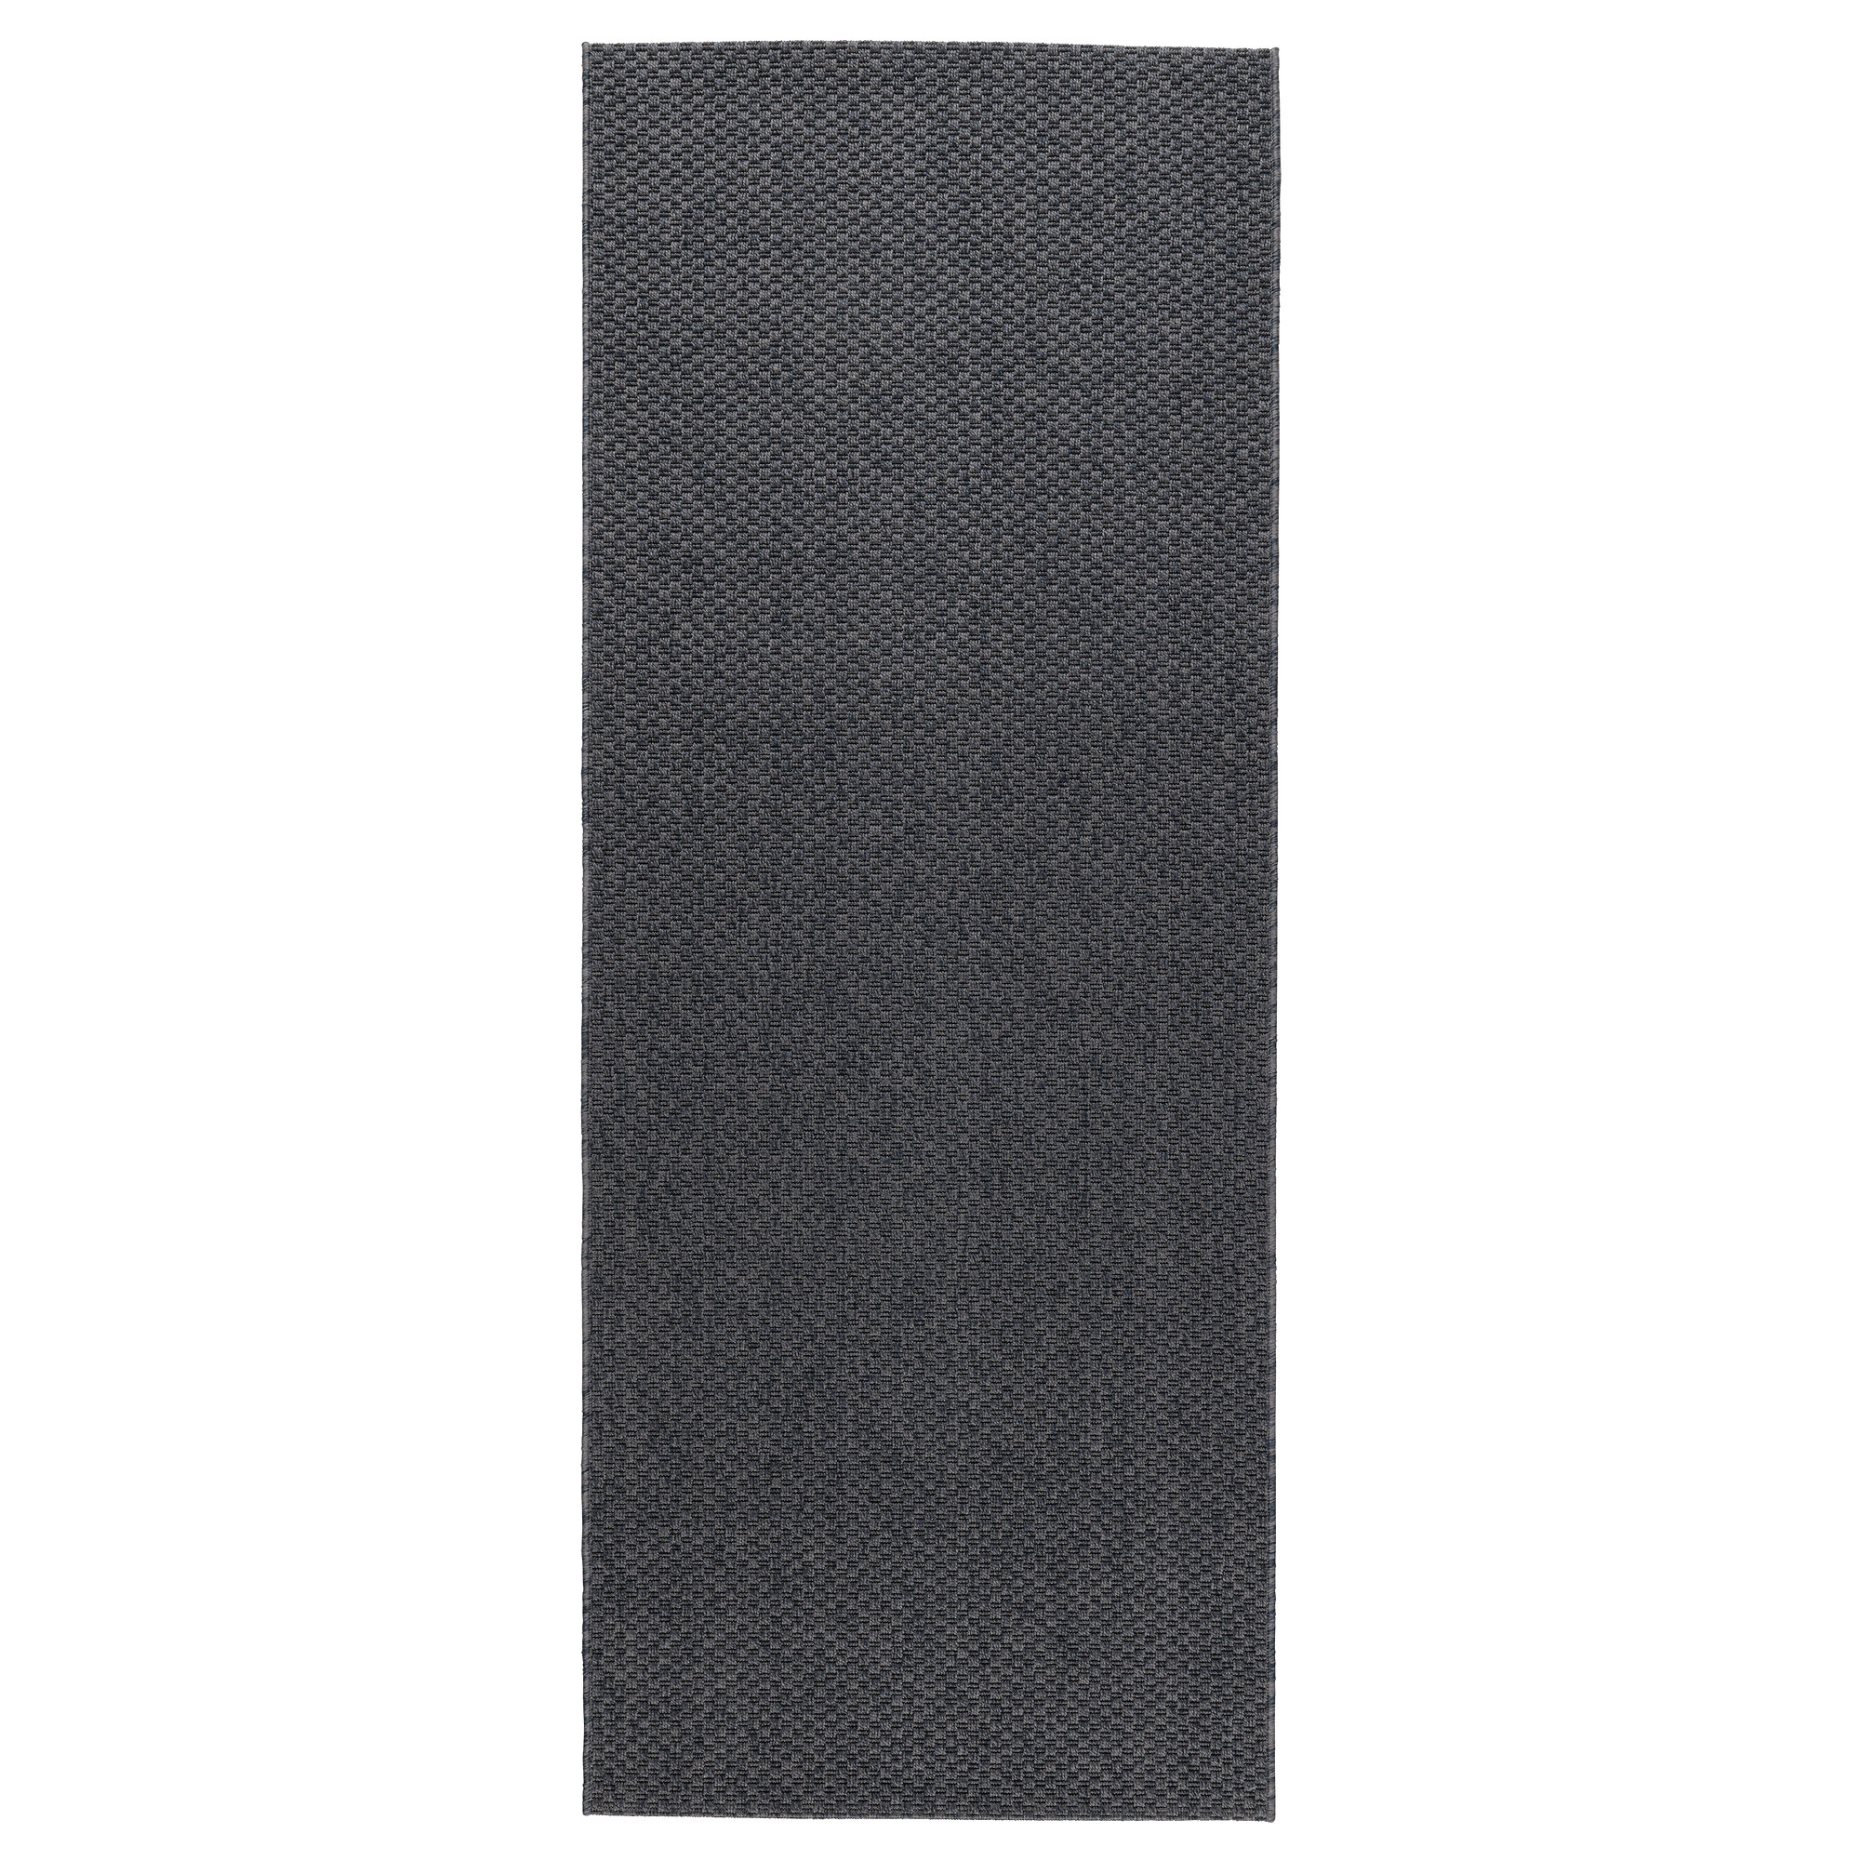 MORUM, χαλί χαμηλή πλέξη/εσωτερικού/εξωτερικού χώρου, 80x200 cm, 102.035.73